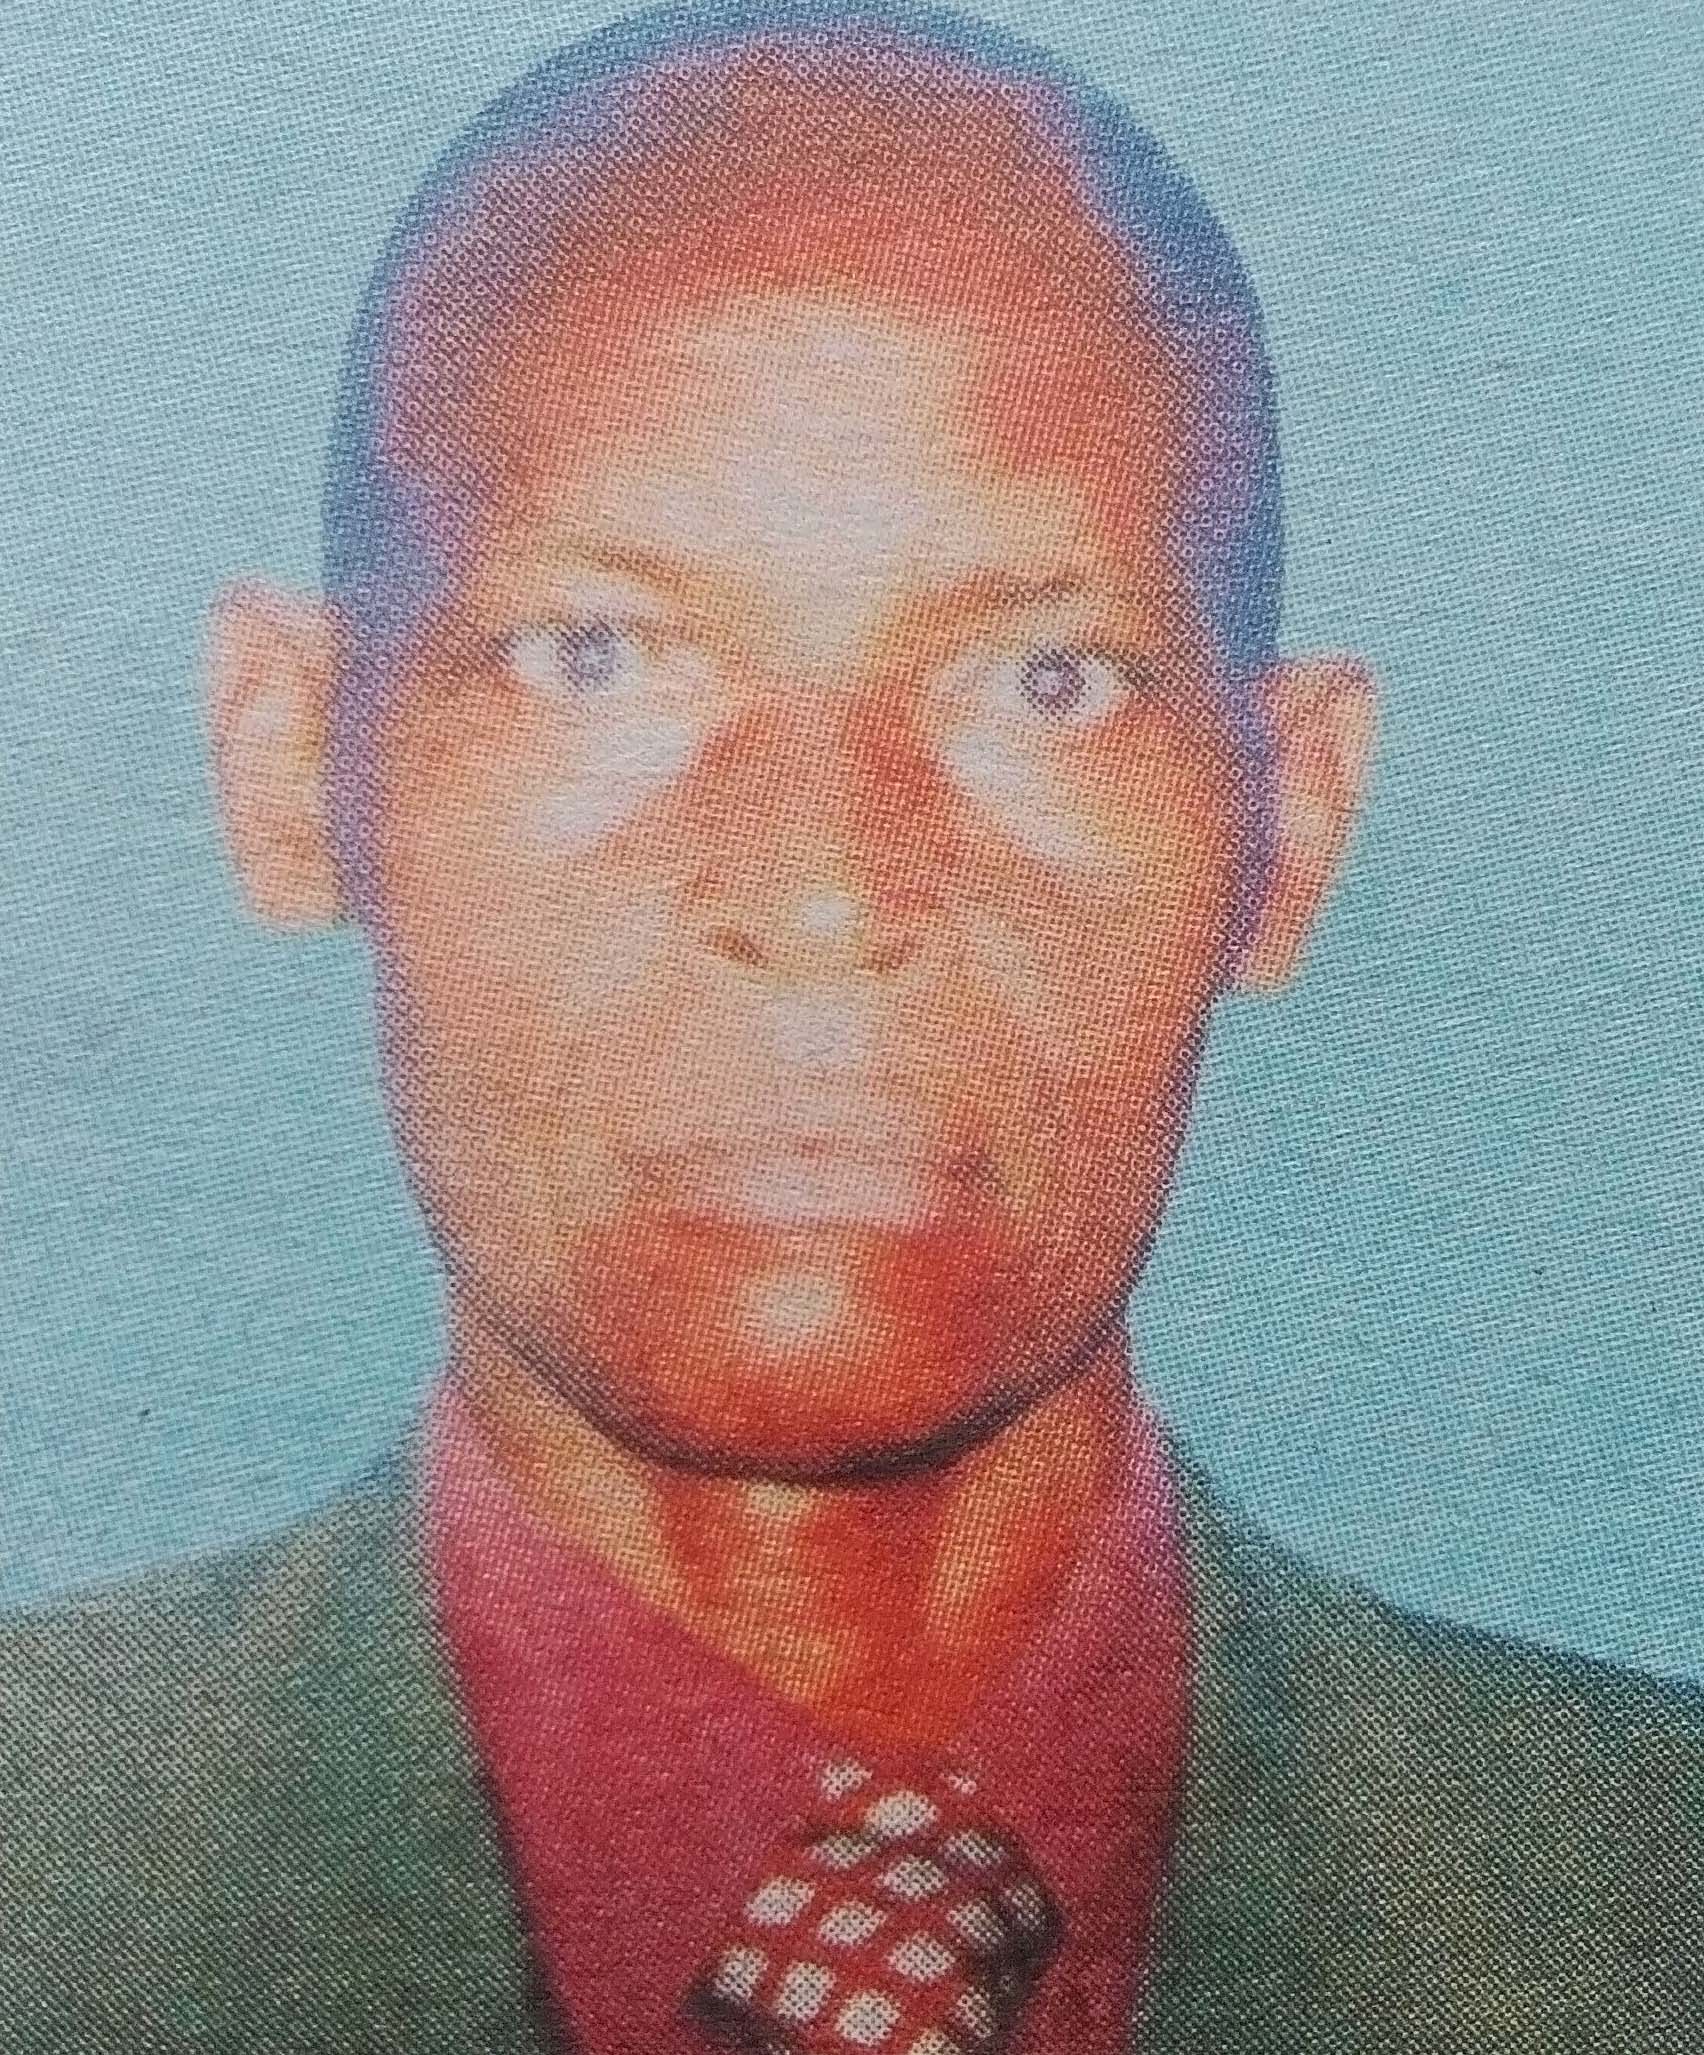 Obituary Image of Jeremiah B. Maseki Ithuku